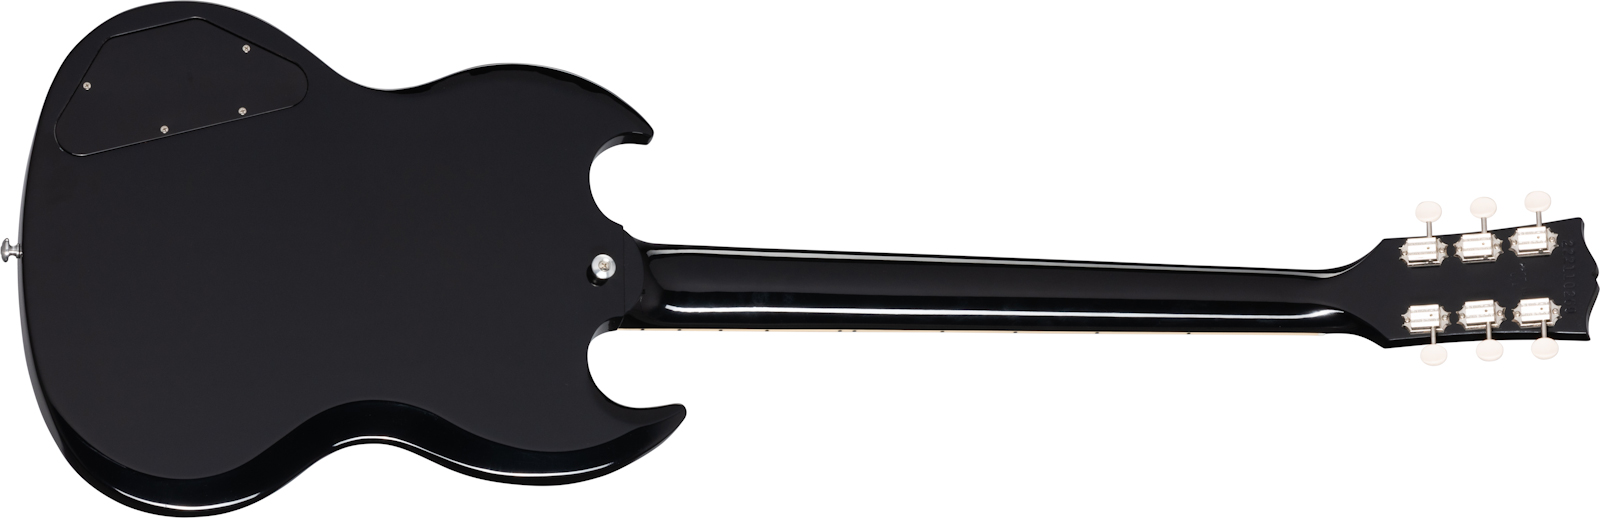 Gibson Sg Special Original 2021 2p90 Ht Rw - Ebony - Double cut electric guitar - Variation 1